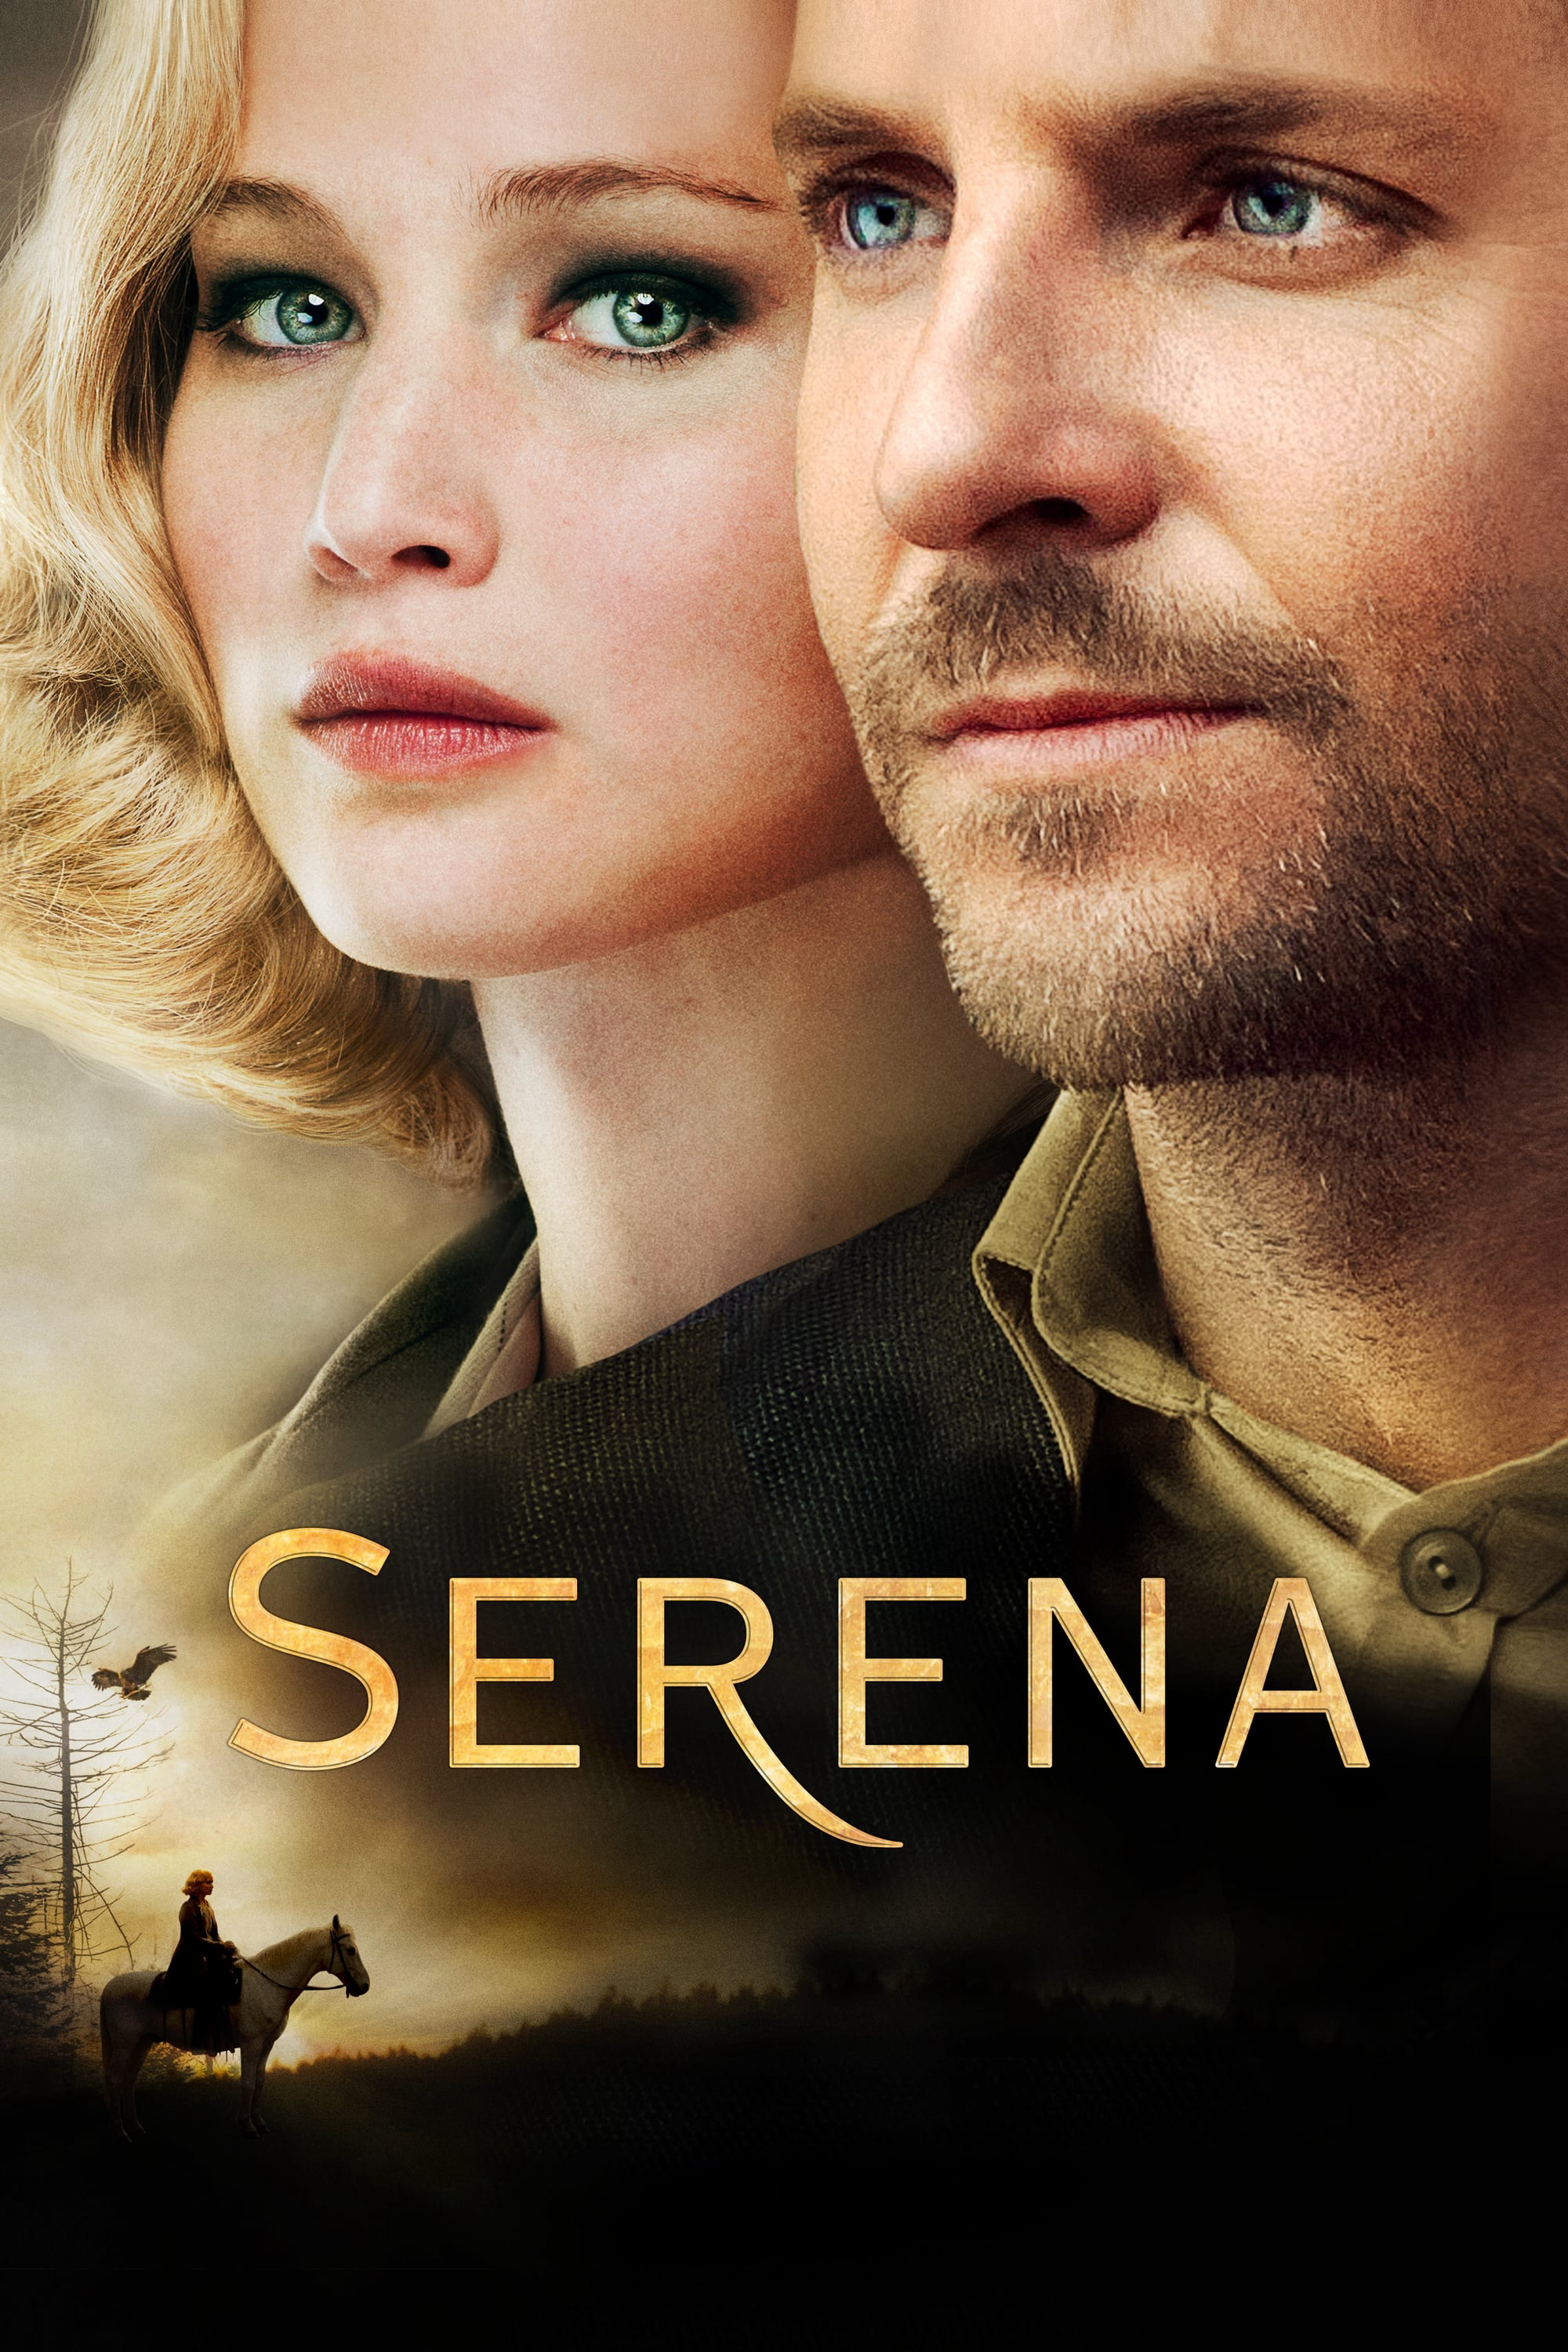 Poster Phim Nàng Serena (Serena)